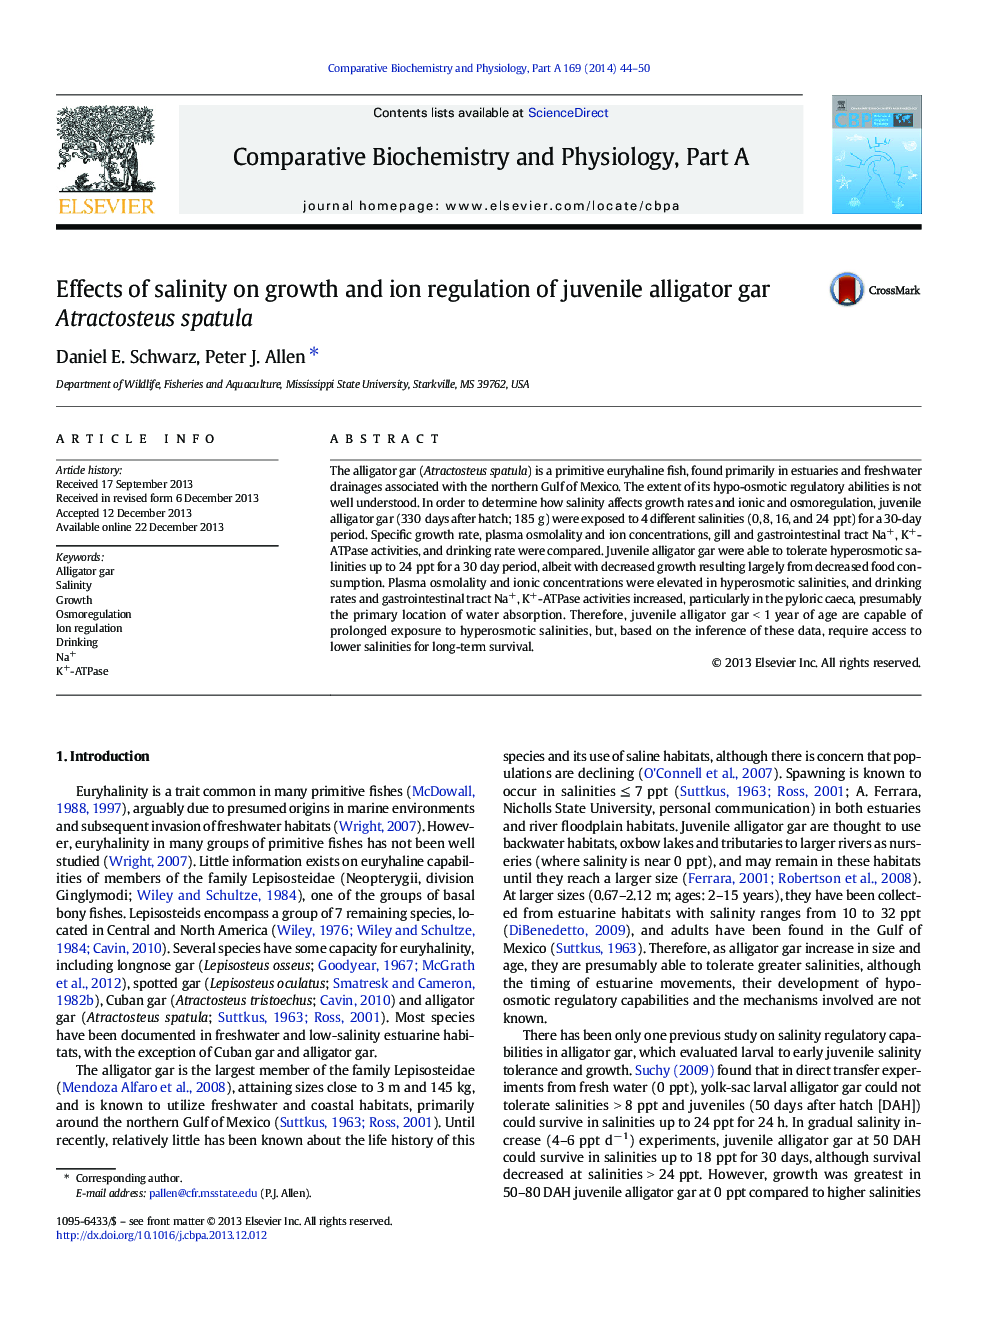 Effects of salinity on growth and ion regulation of juvenile alligator gar Atractosteus spatula